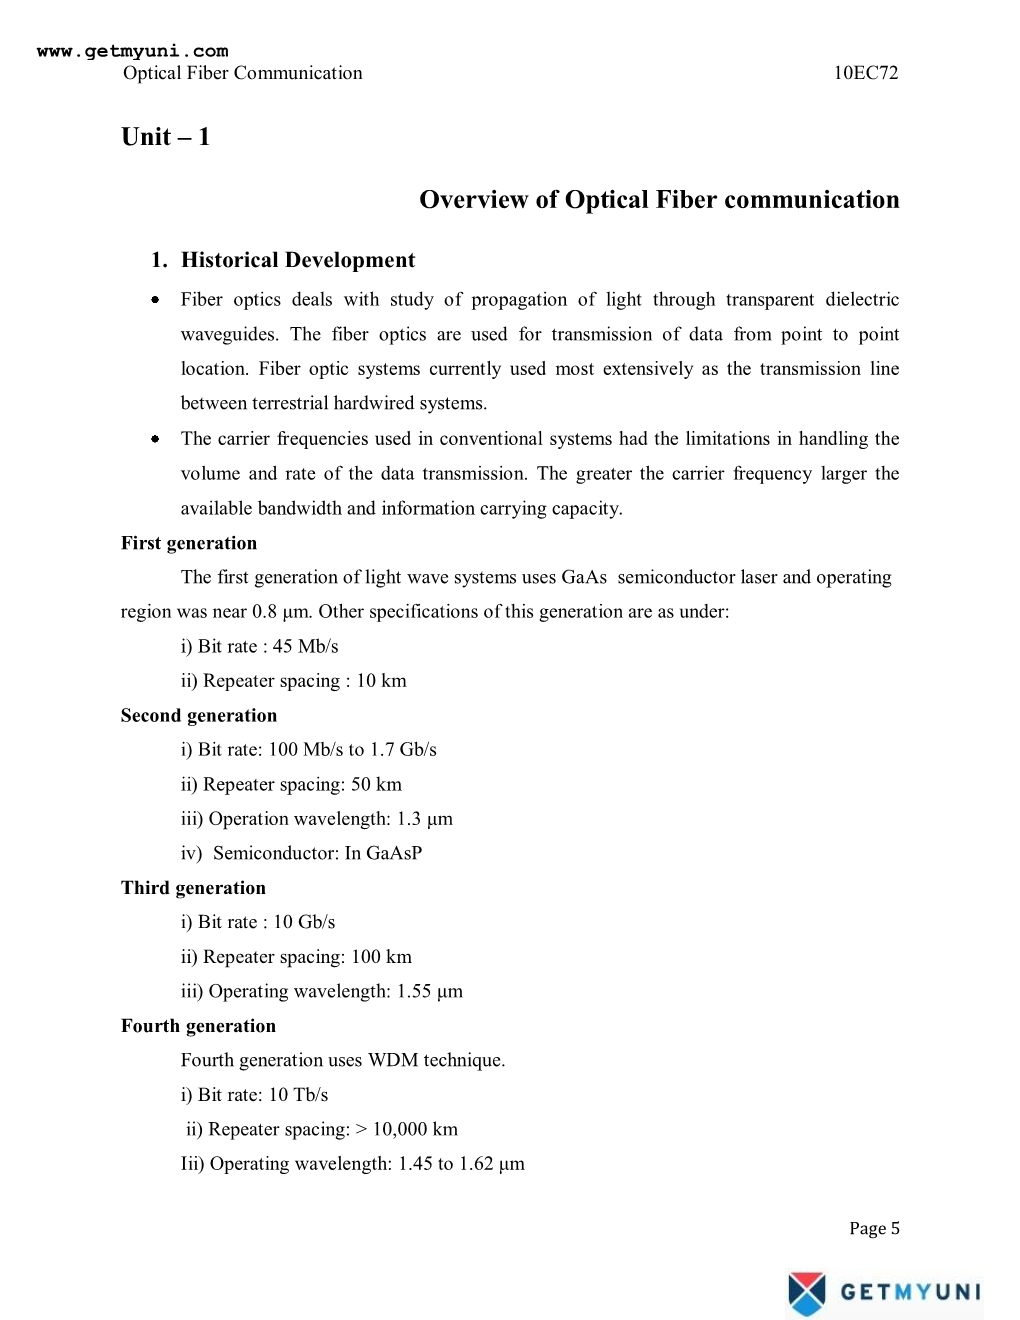 Unit – 1 Overview of Optical Fiber Communication